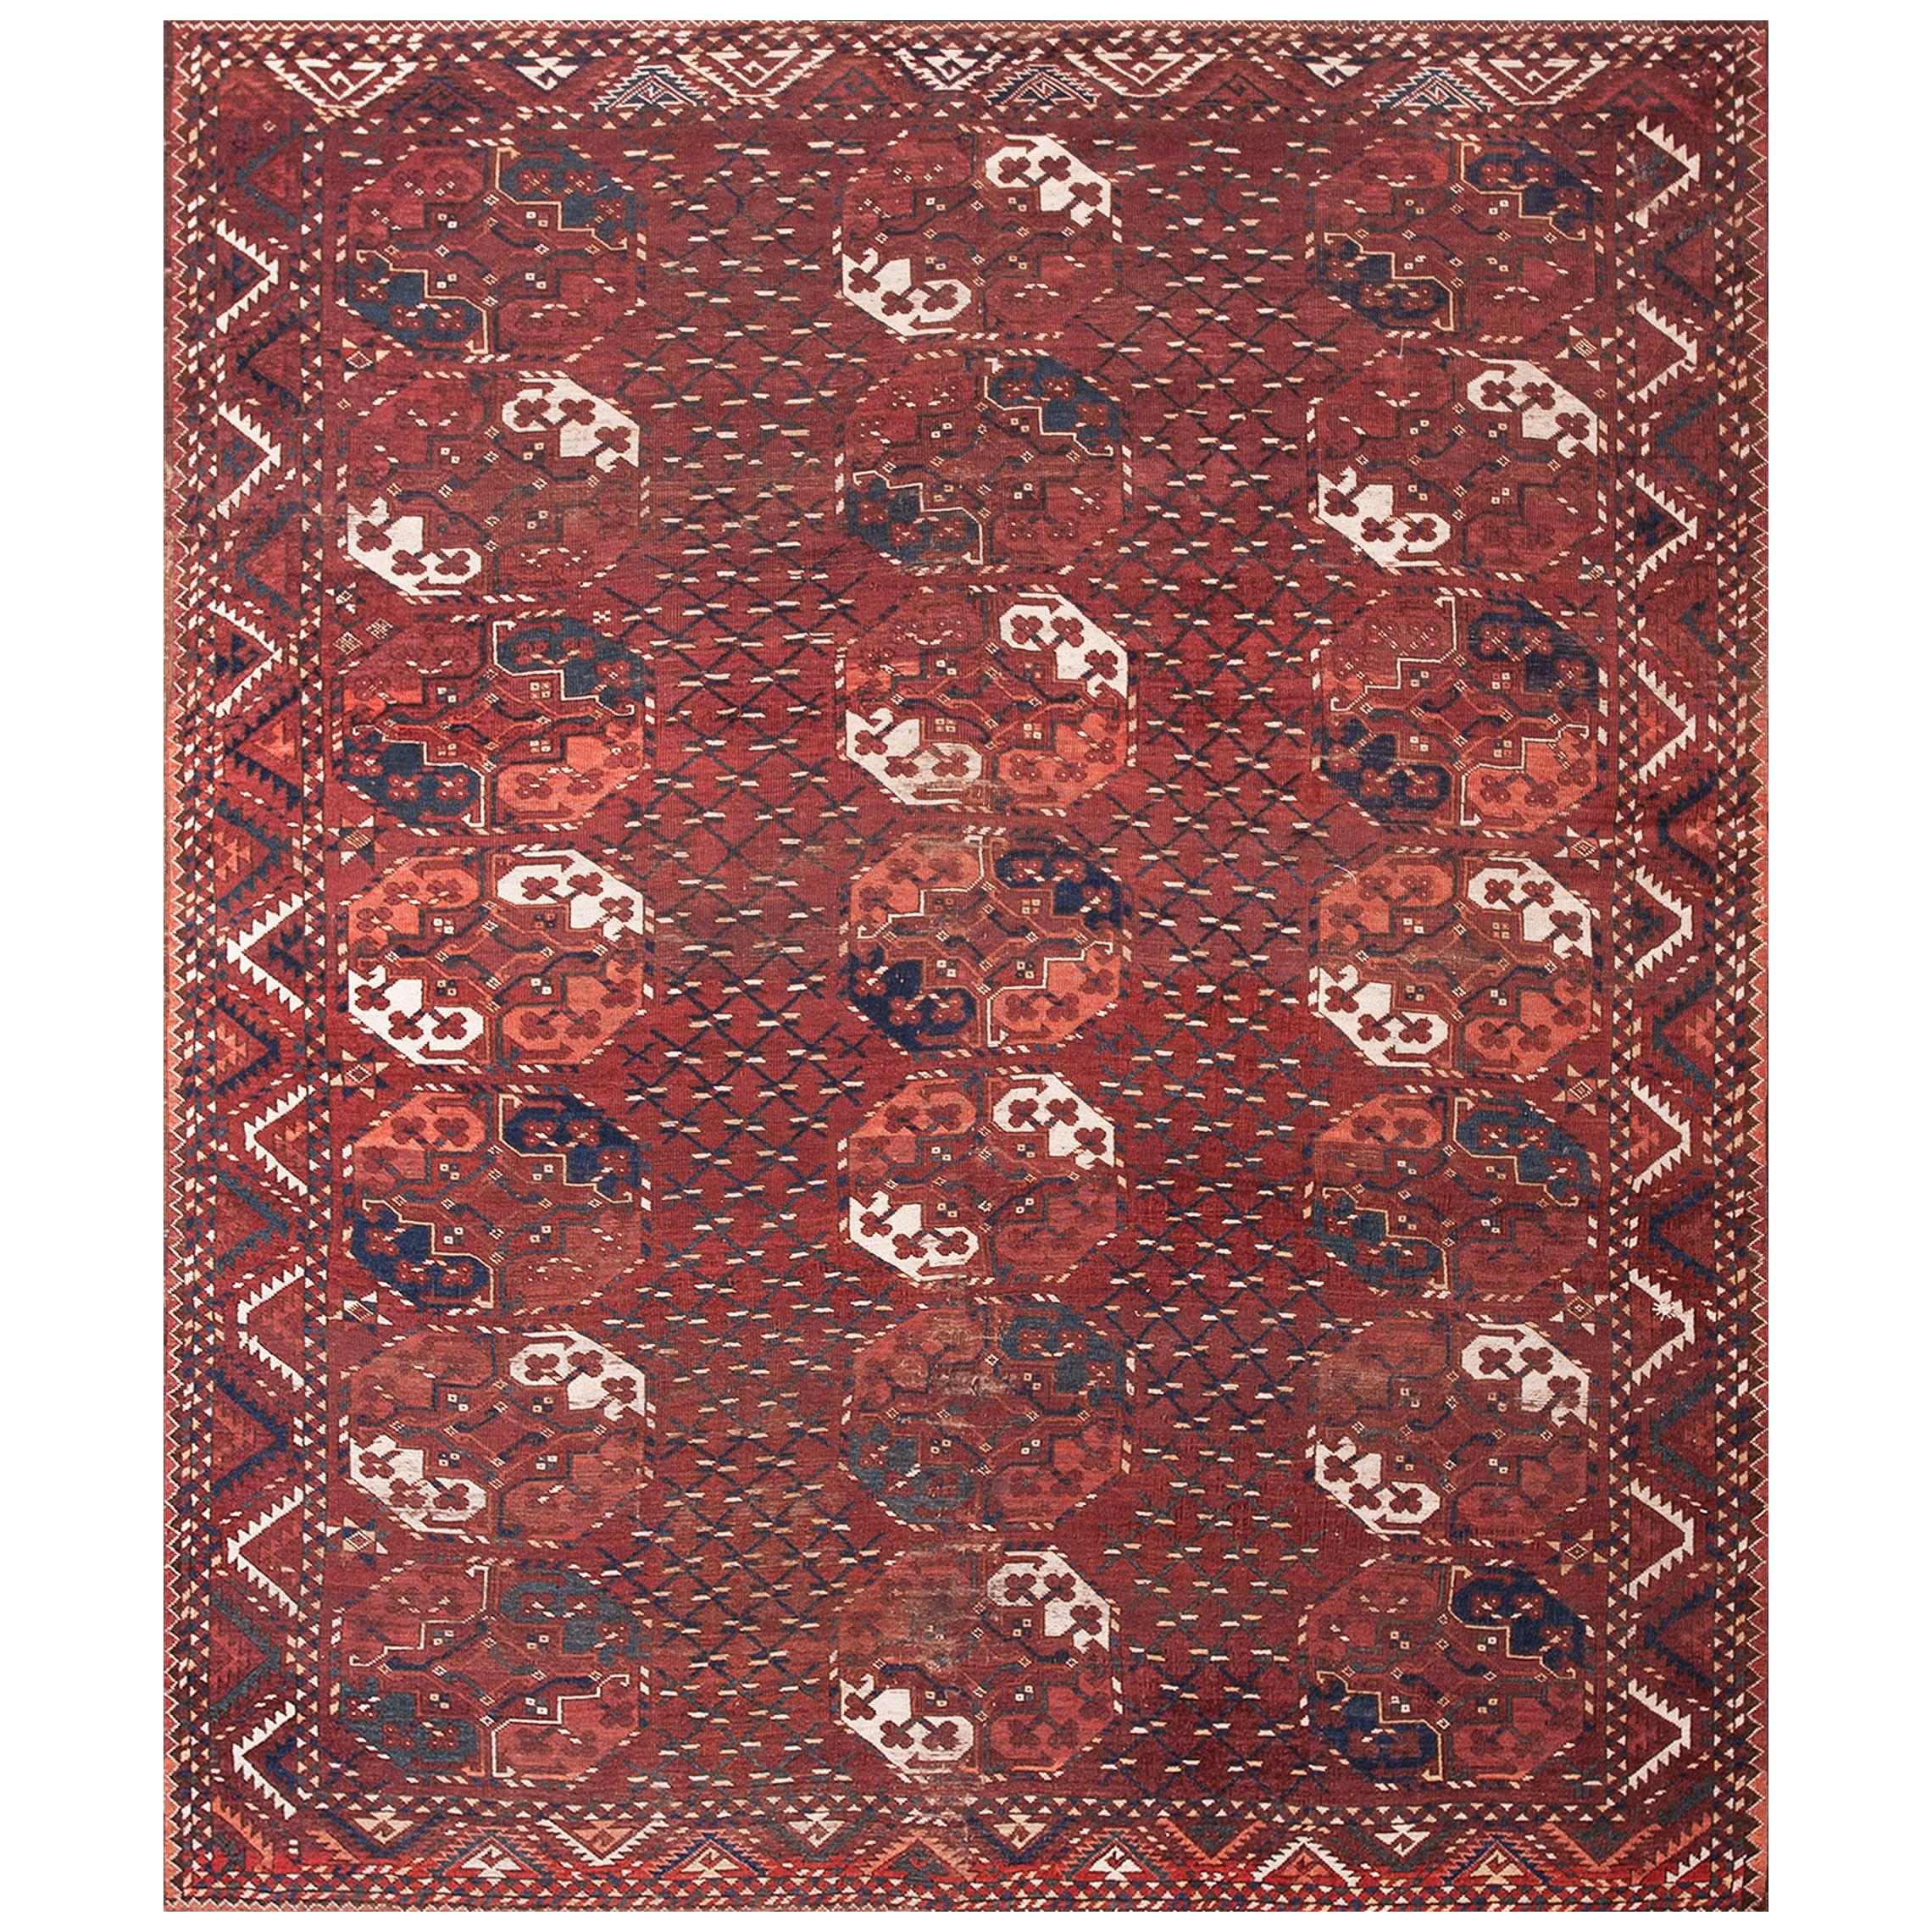 Tapis Beshir d'Asie centrale du milieu du 19e siècle - Tapis principal (6'6" x 8'-198 x 244)